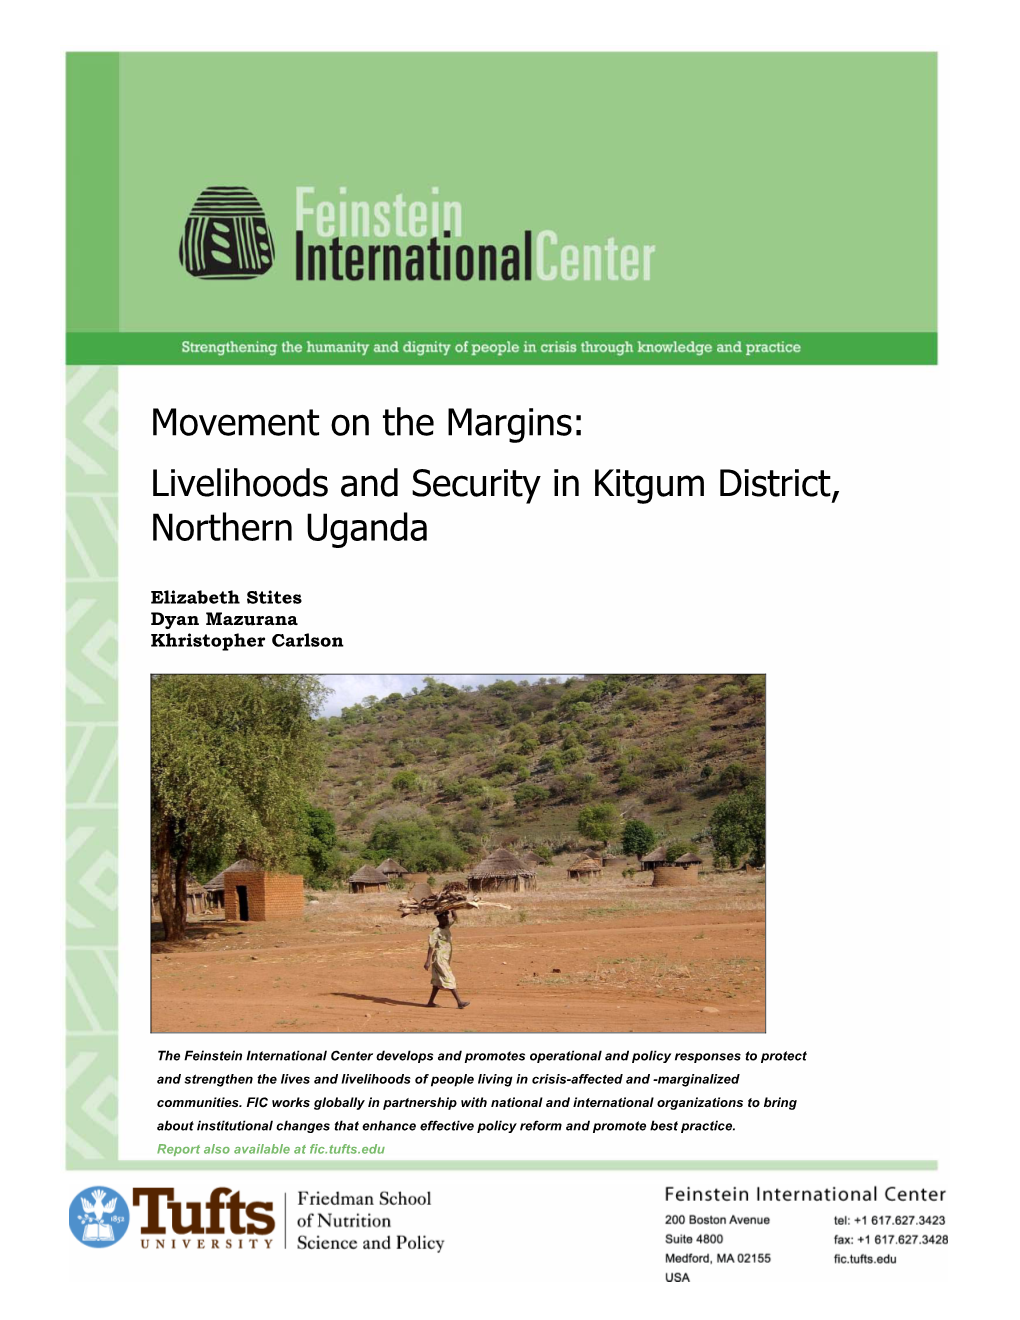 Livelihoods and Security in Kitgum District, Northern Uganda